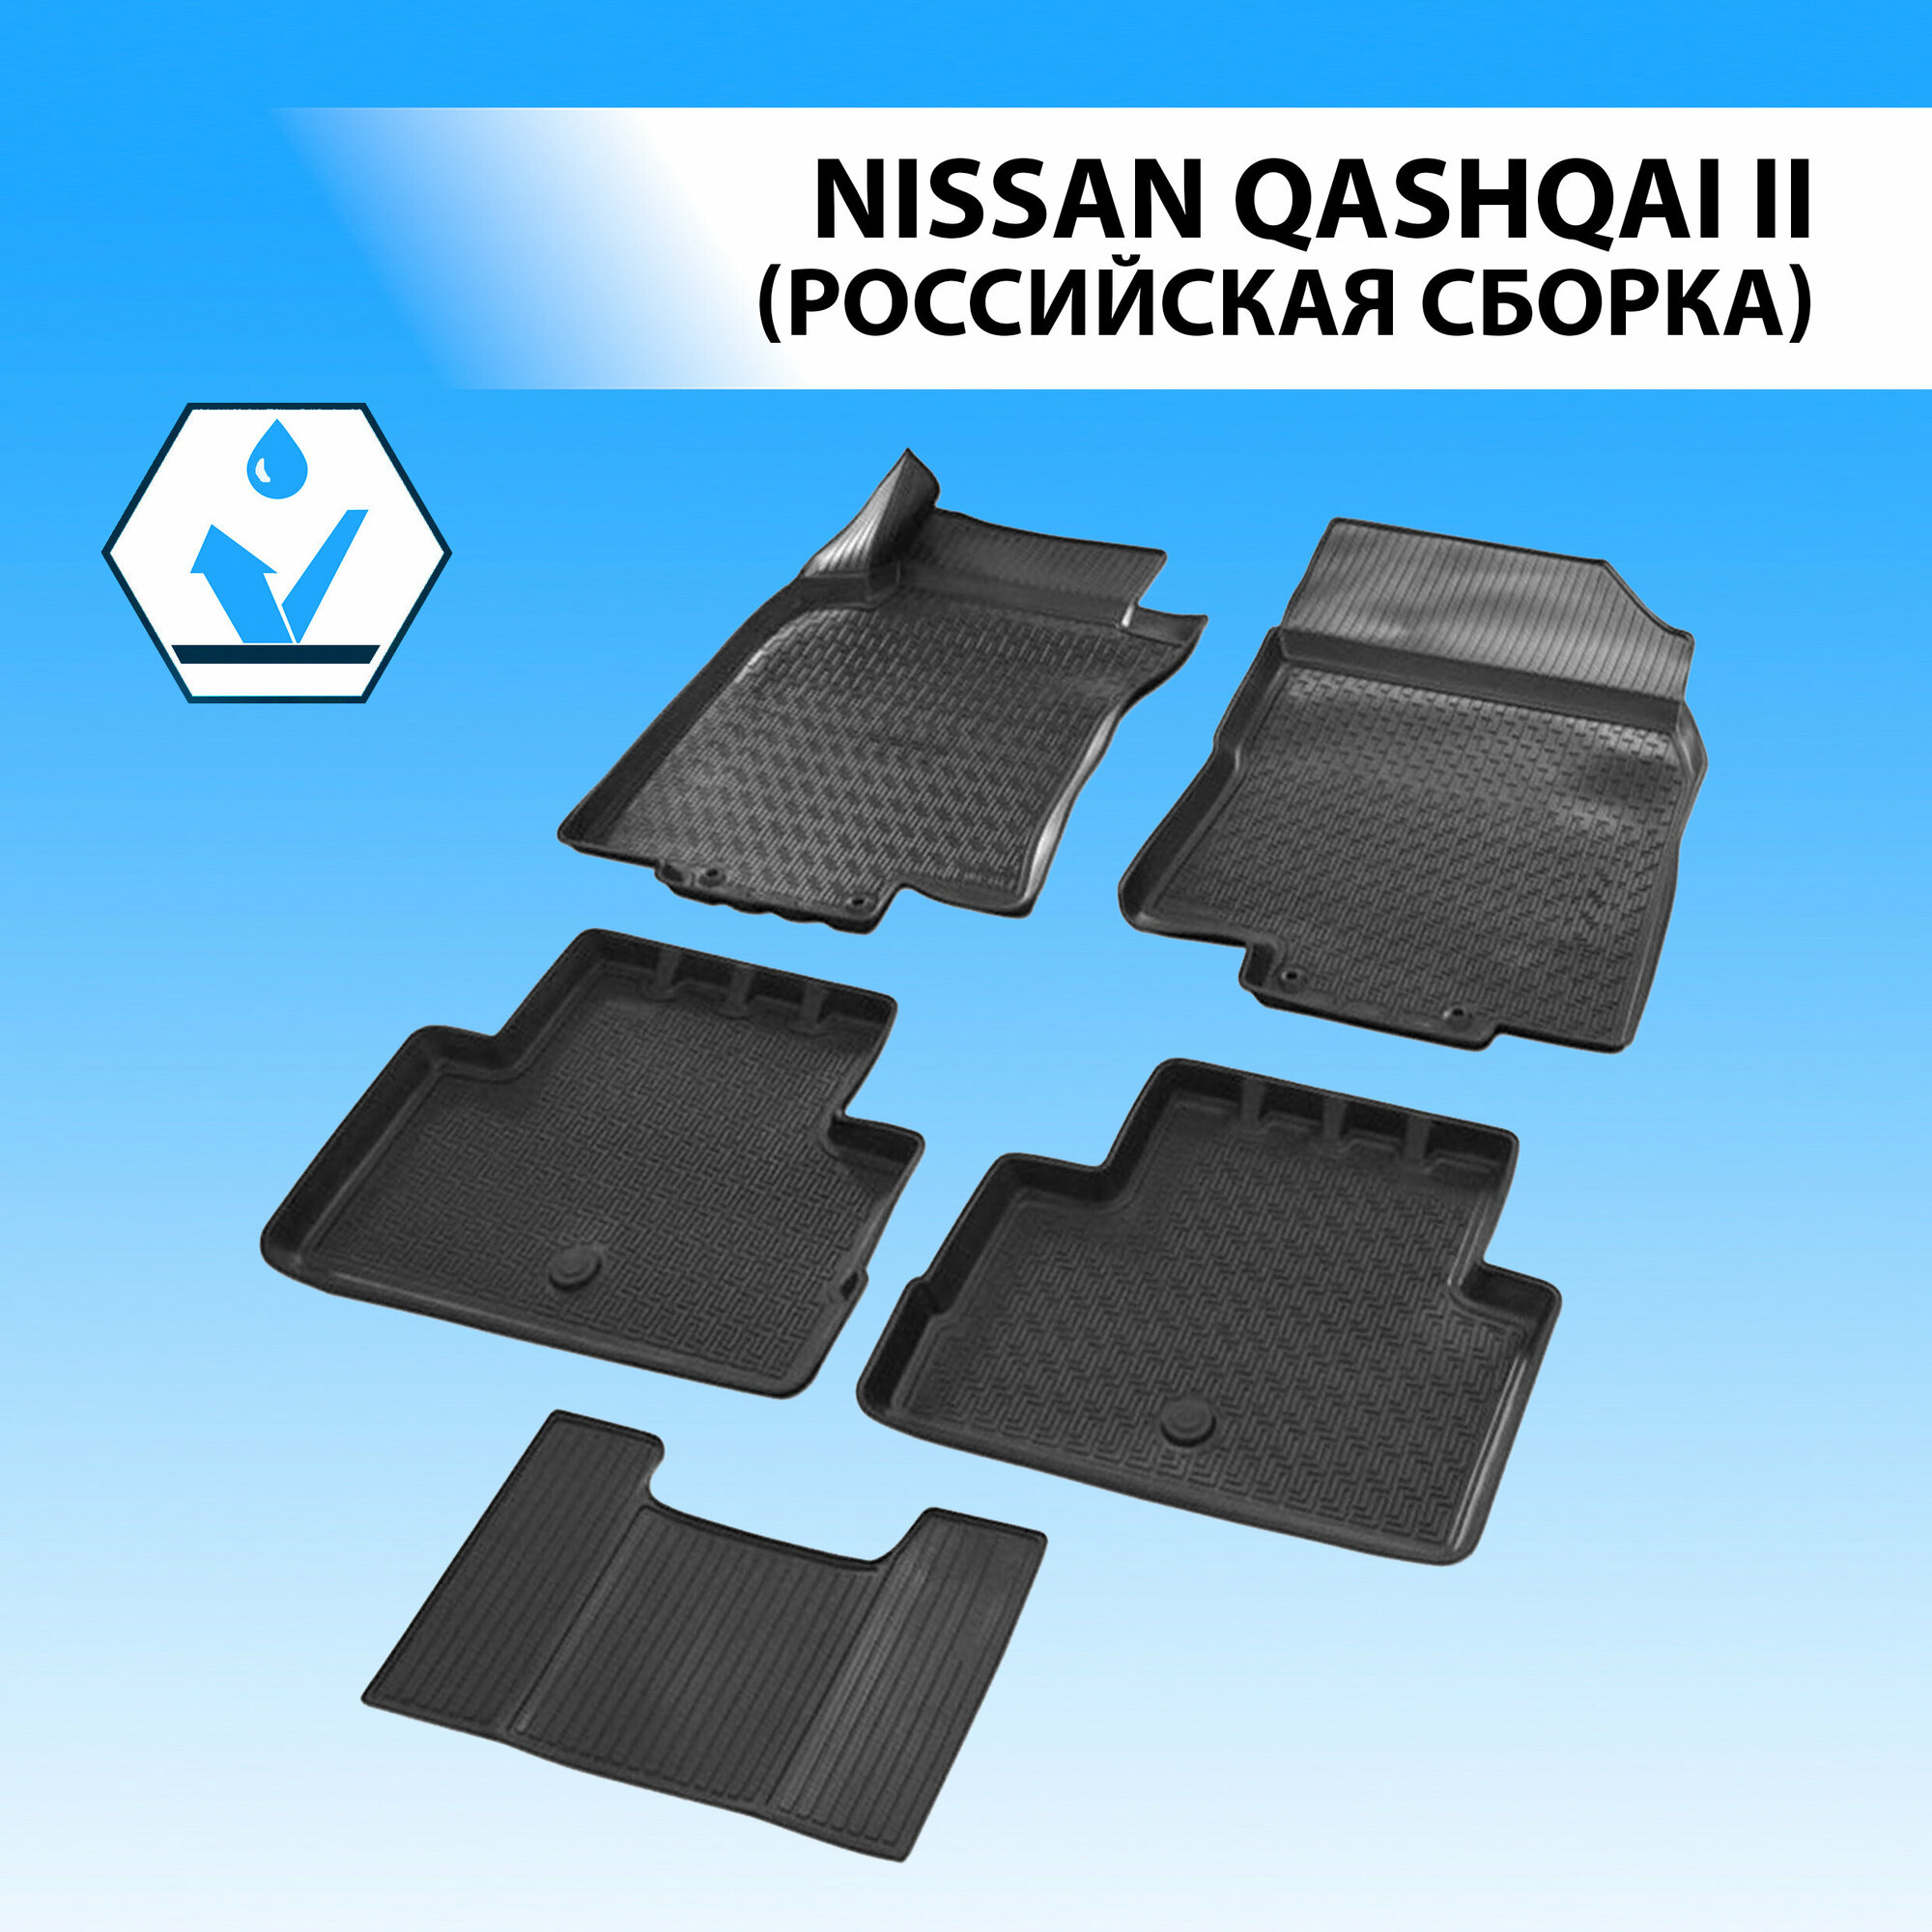 Ковры На Nissan Qashqai (Российская Сборка) Салон, (2015-) Rival арт. 14105004